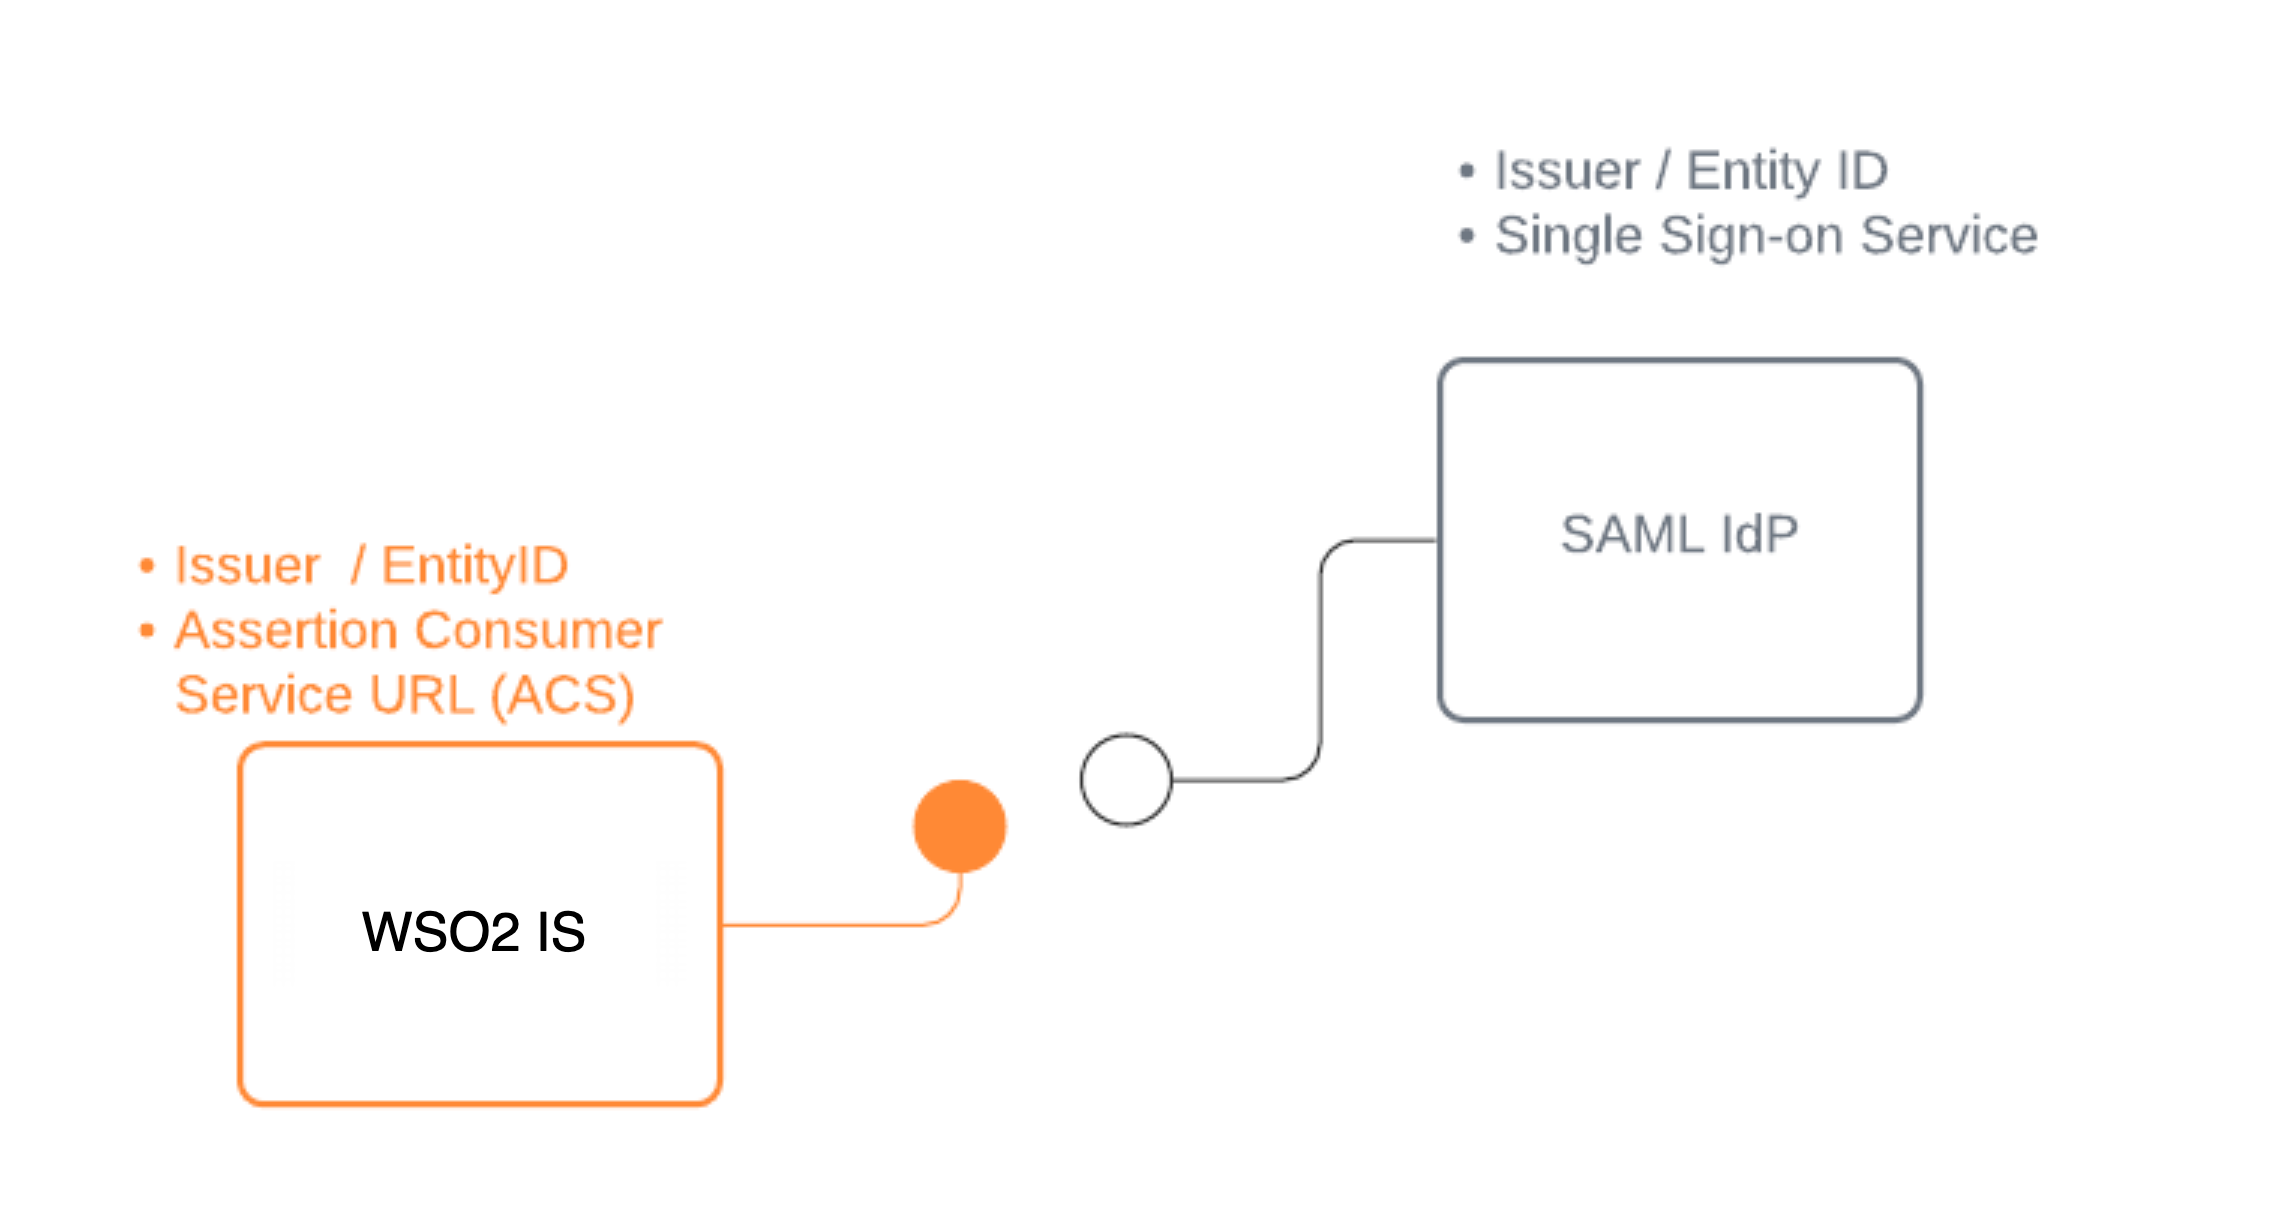 Configure SAML Enterprise IDP login in WSO2 Identity Server